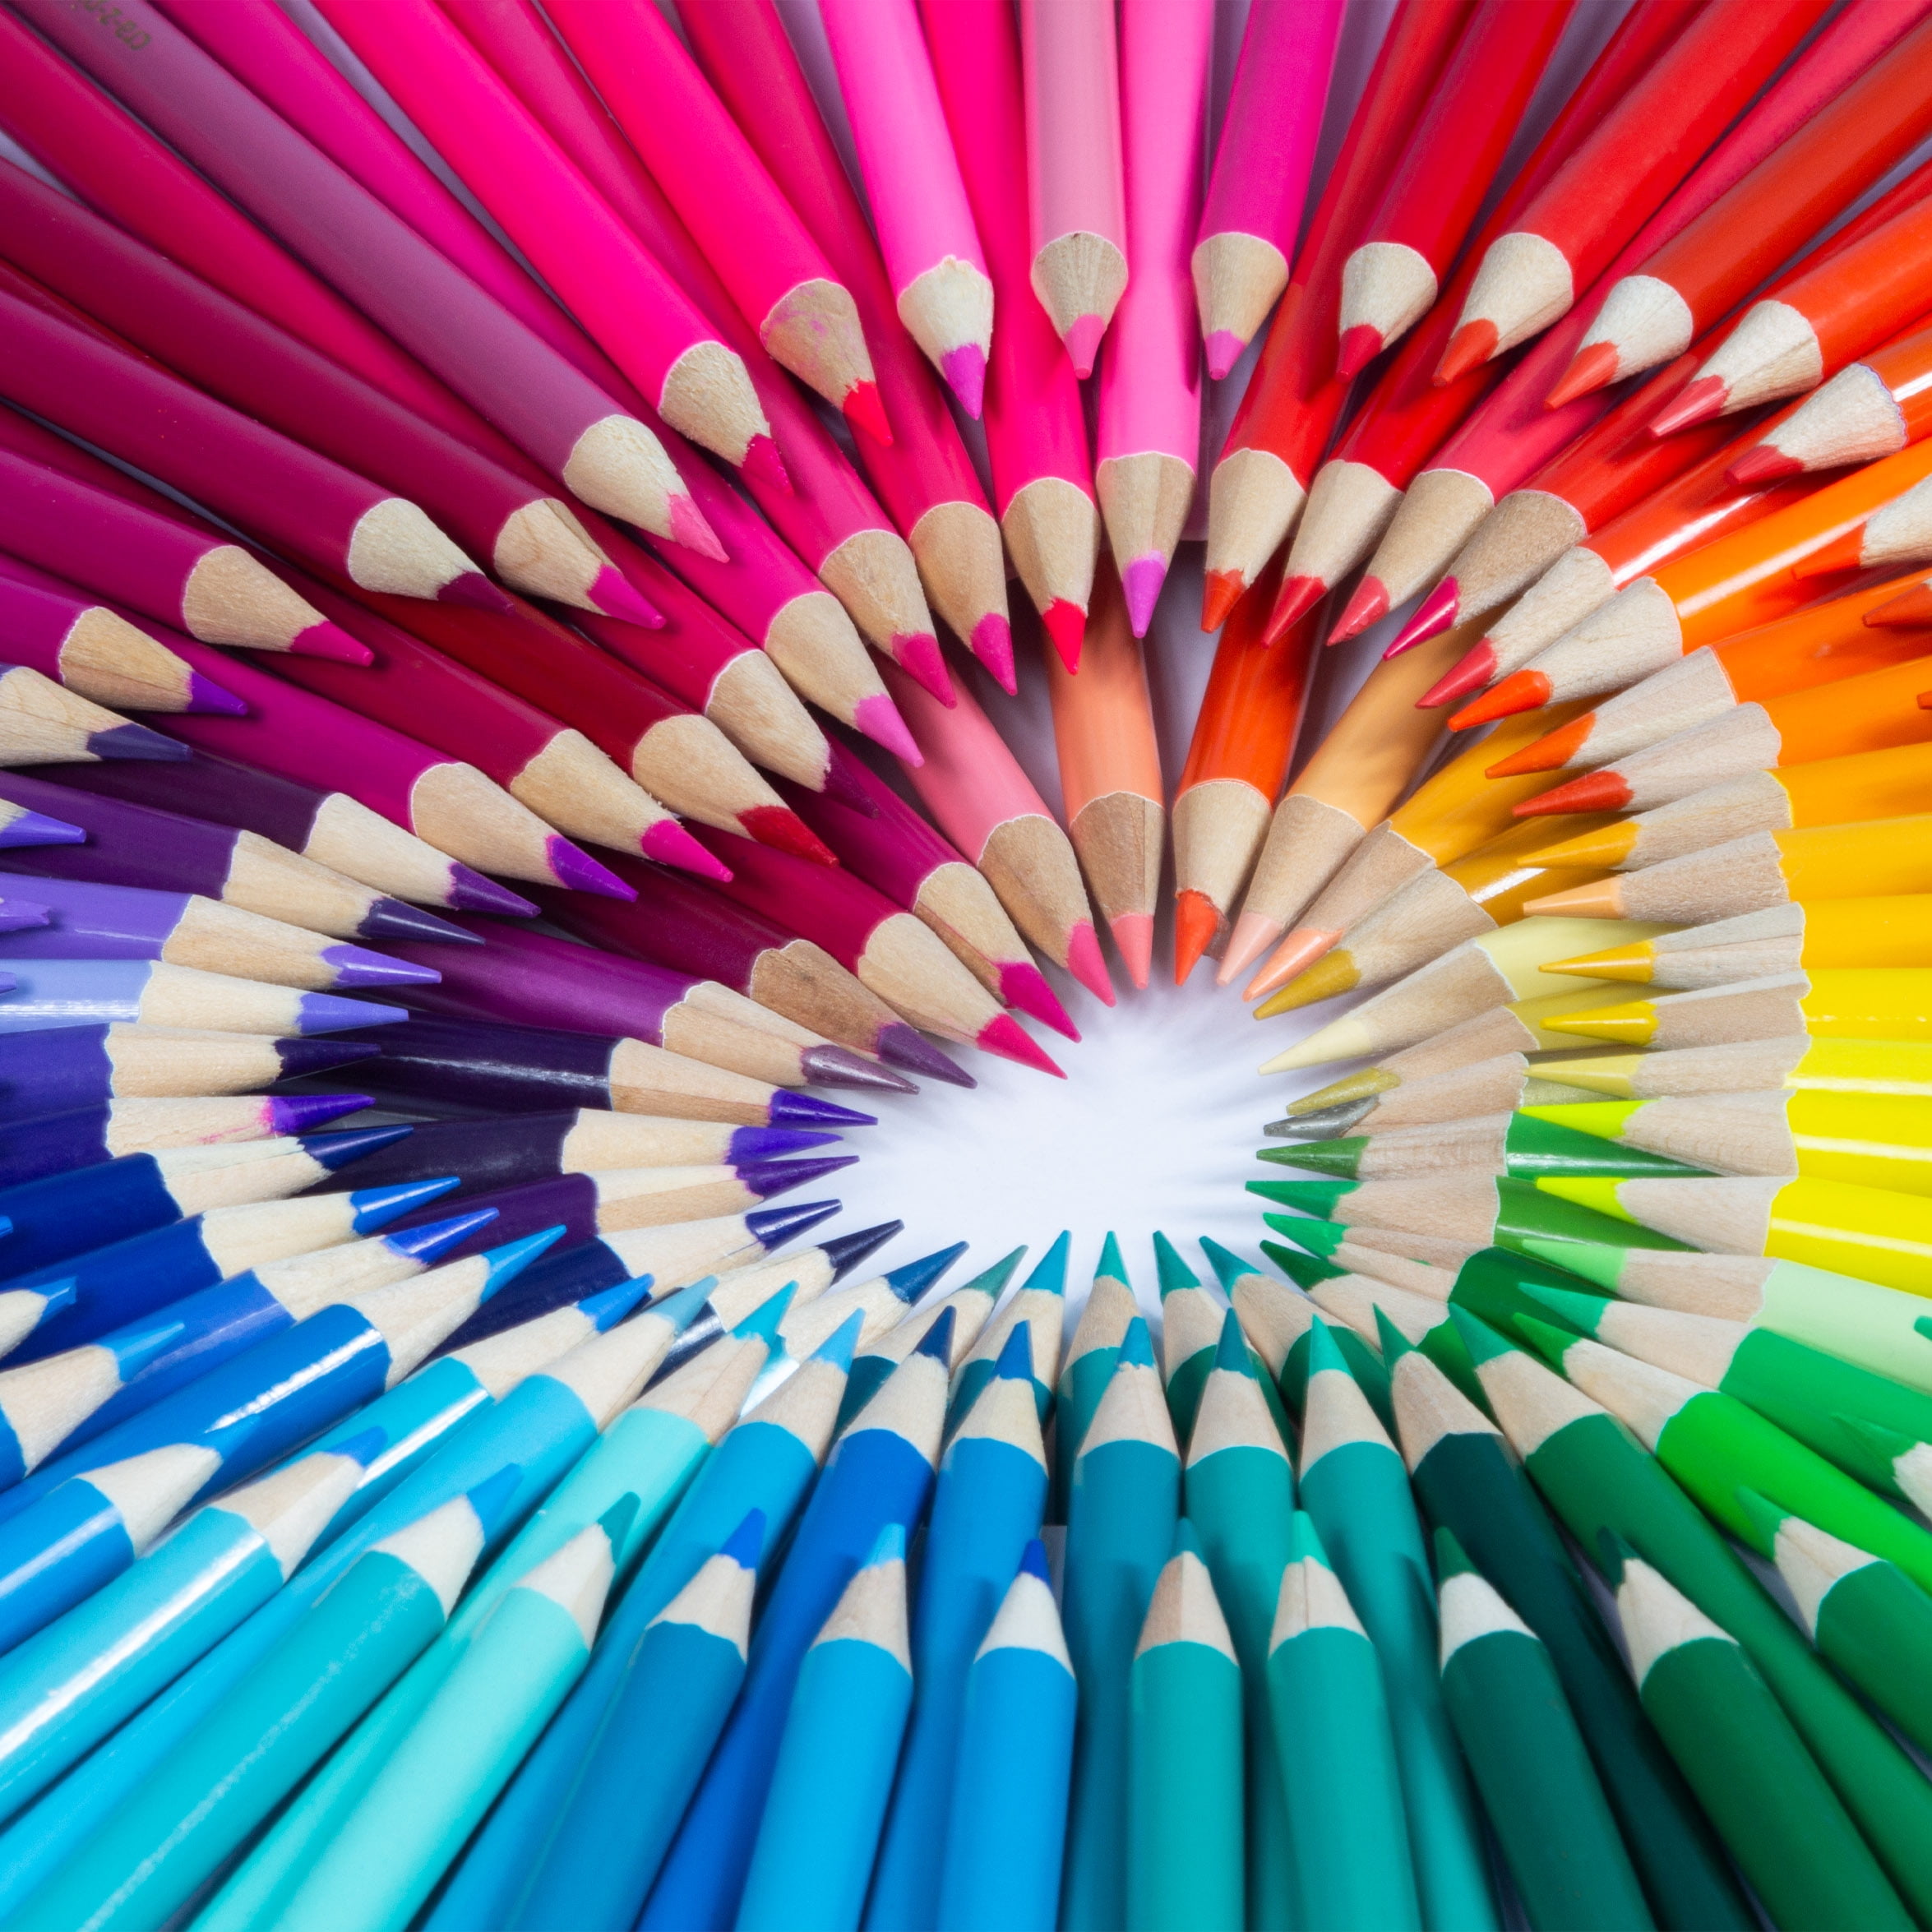 🌟🎁 Cra-Z-Art 100 Colored Pencils, Beginner To Advanced, Children & Adults